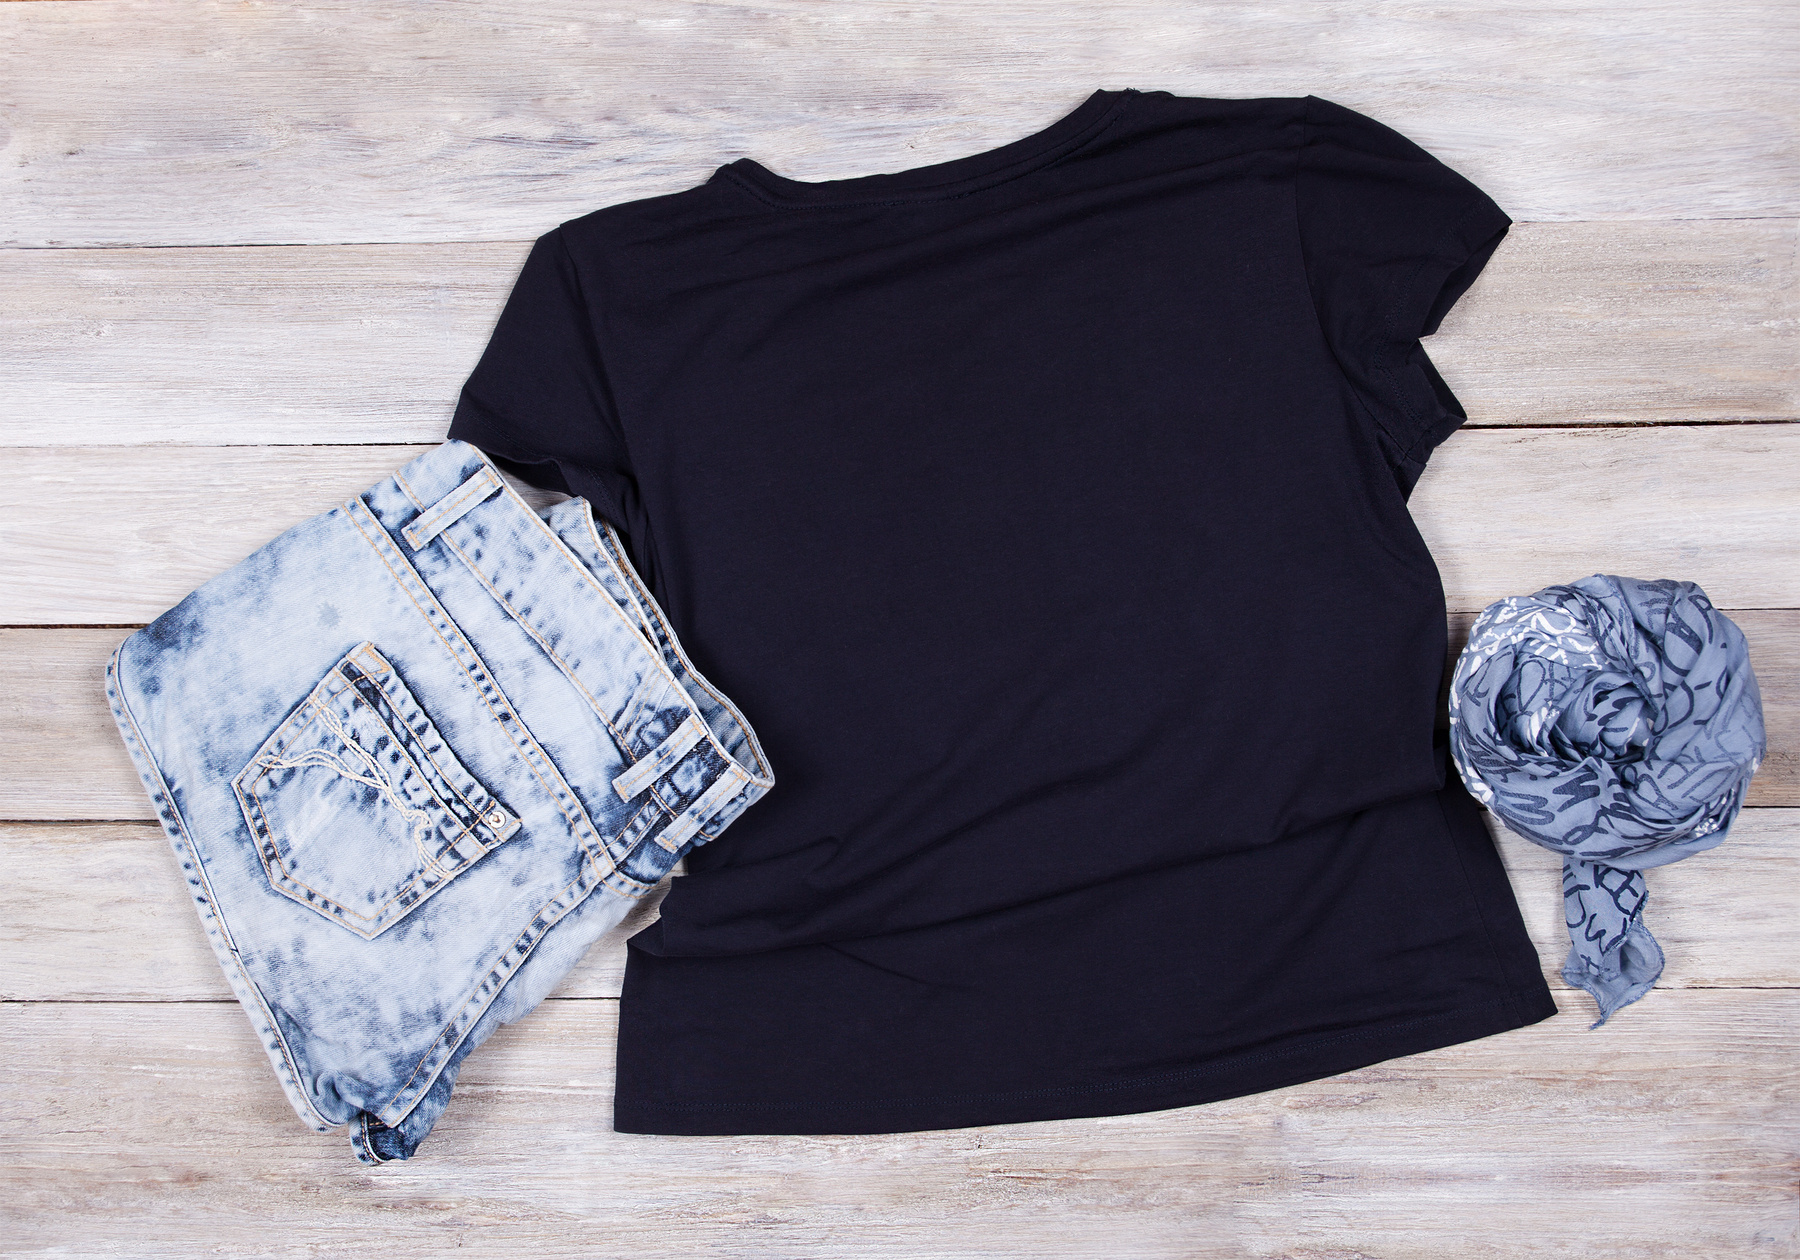 Black T-Shirt Mockup - Short Sleeve T-Shirt Flat Lay